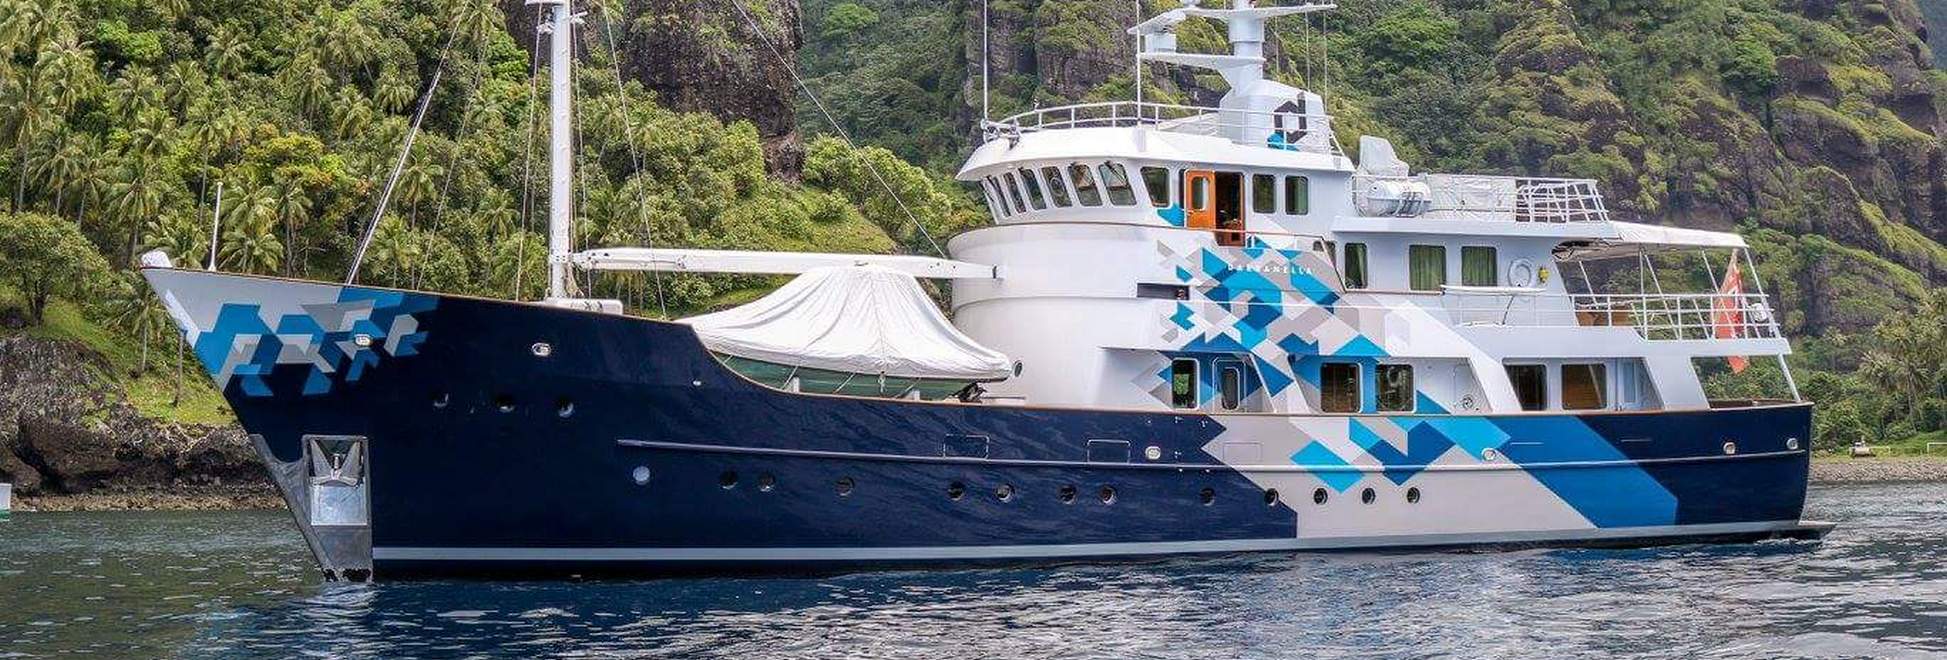 dardanella yacht owner